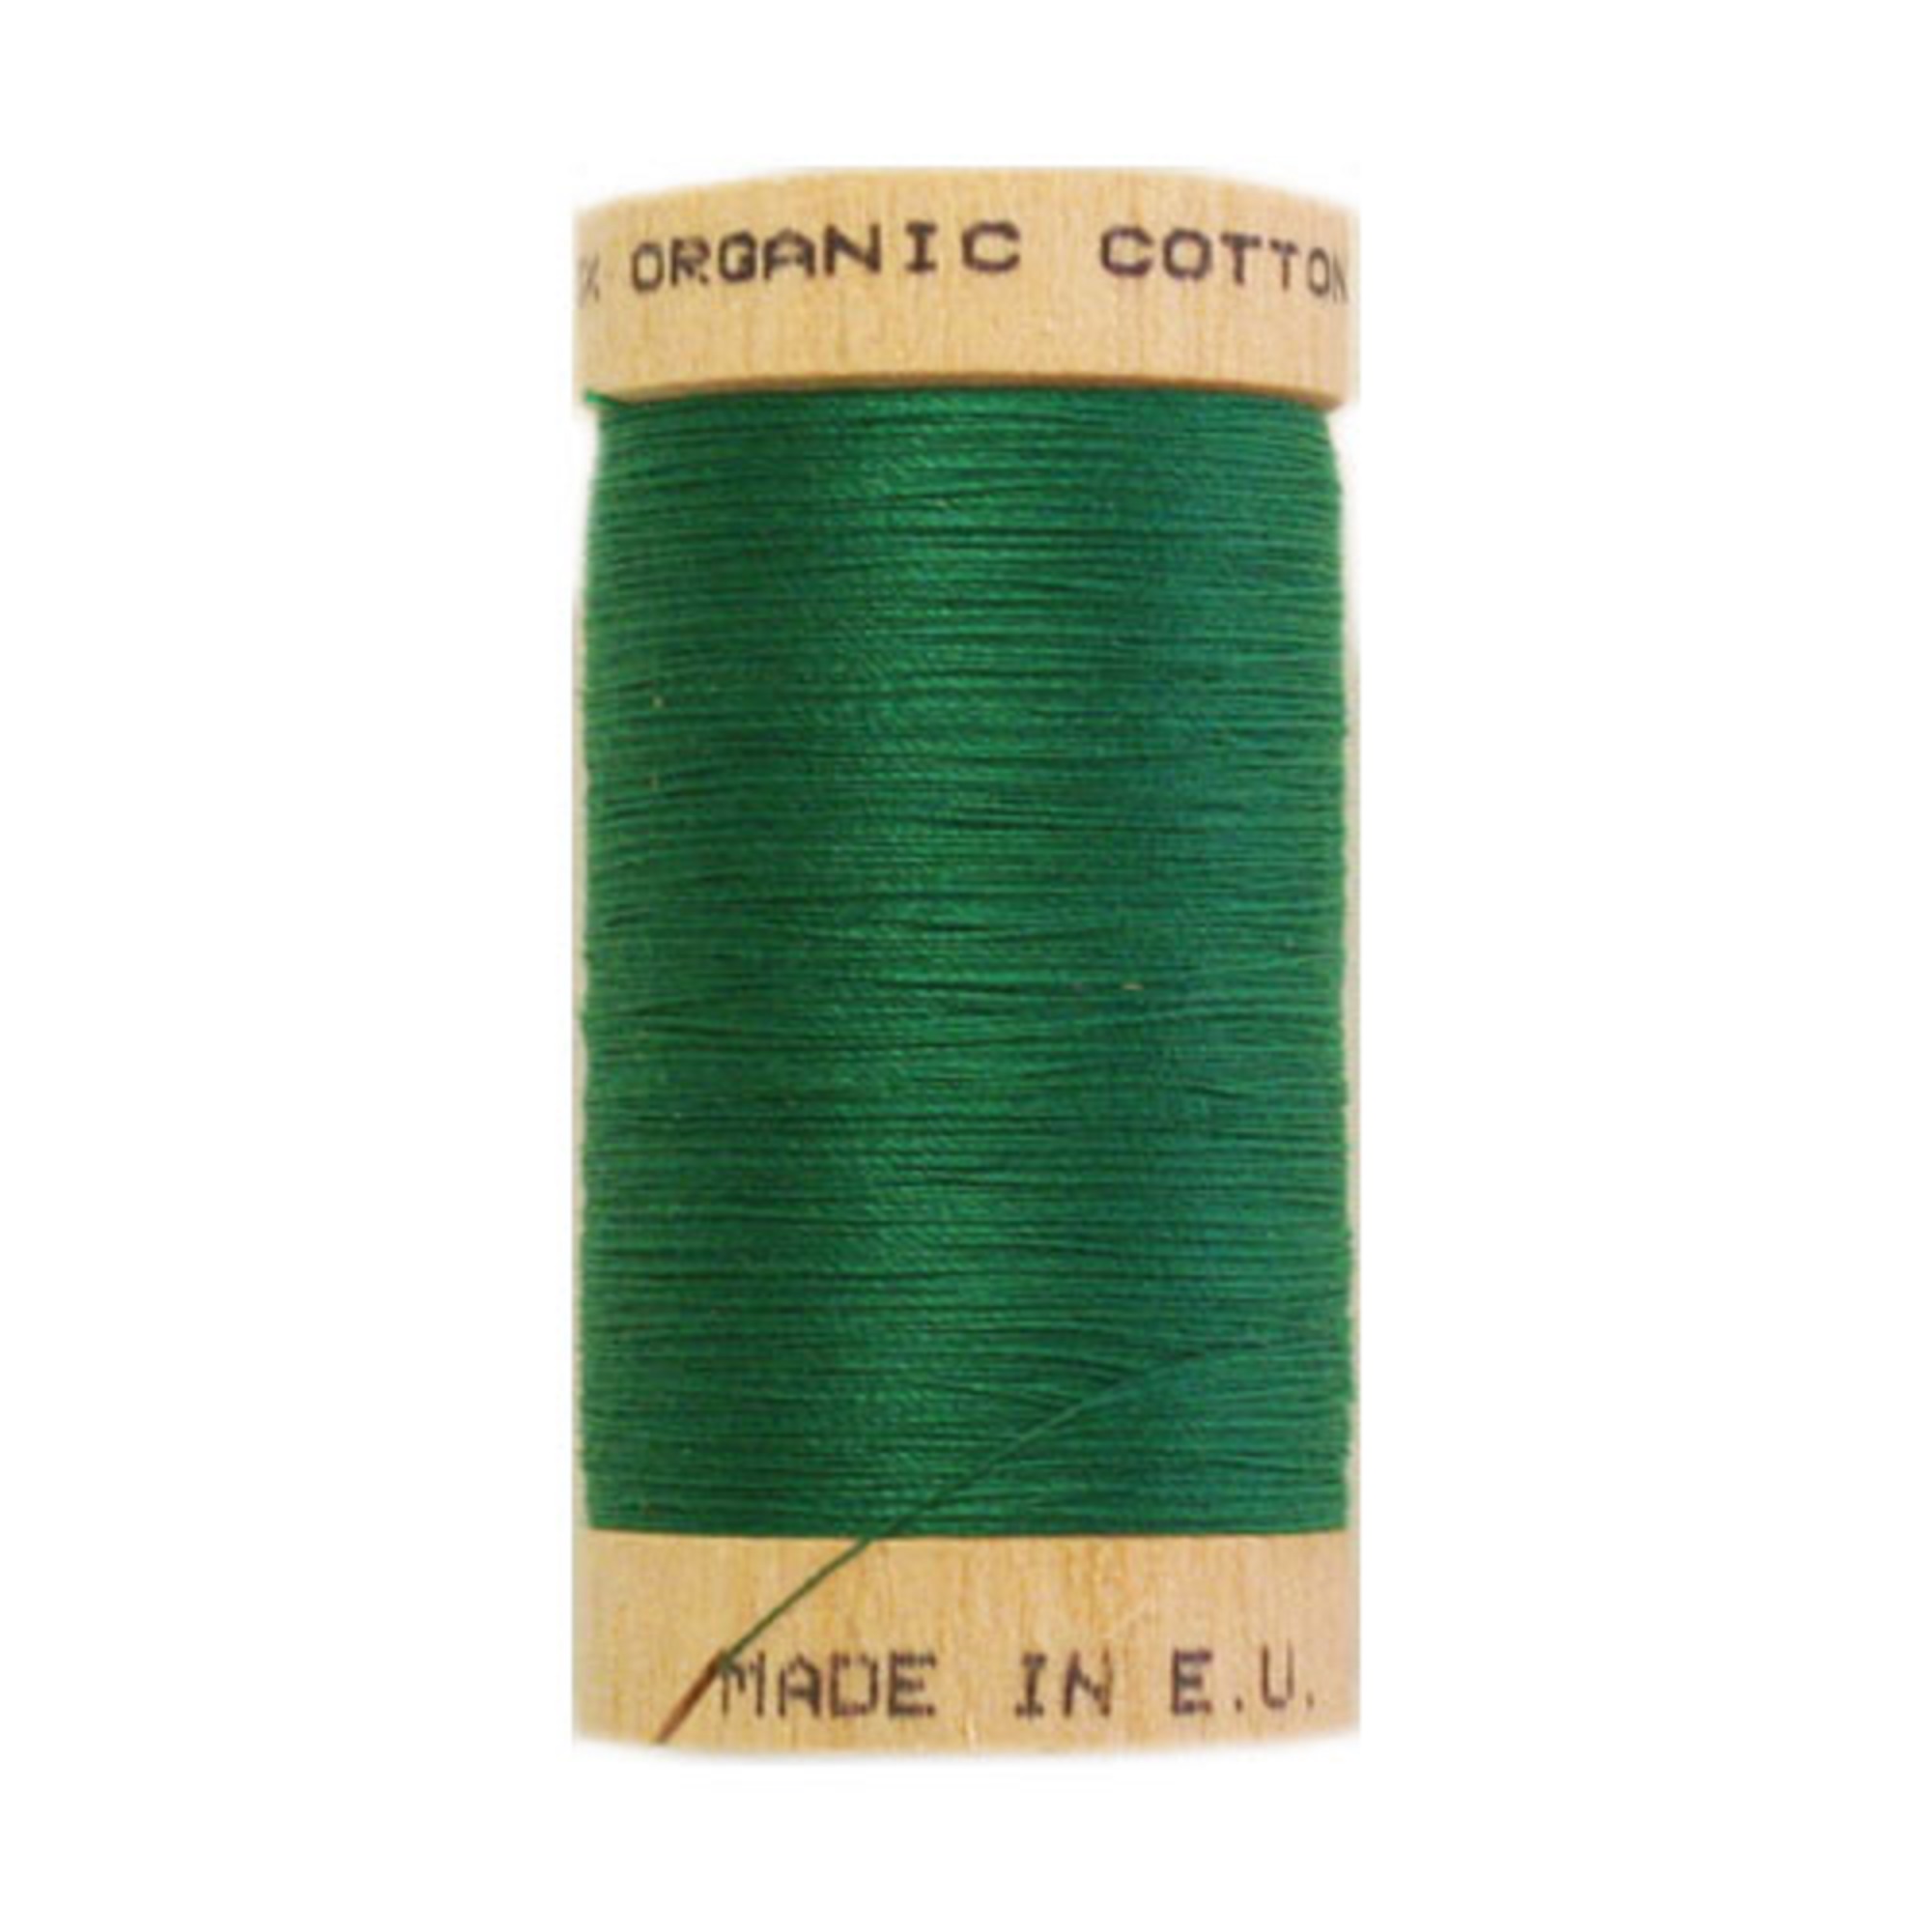 Scanfil Organic Cotton Sewing Thread